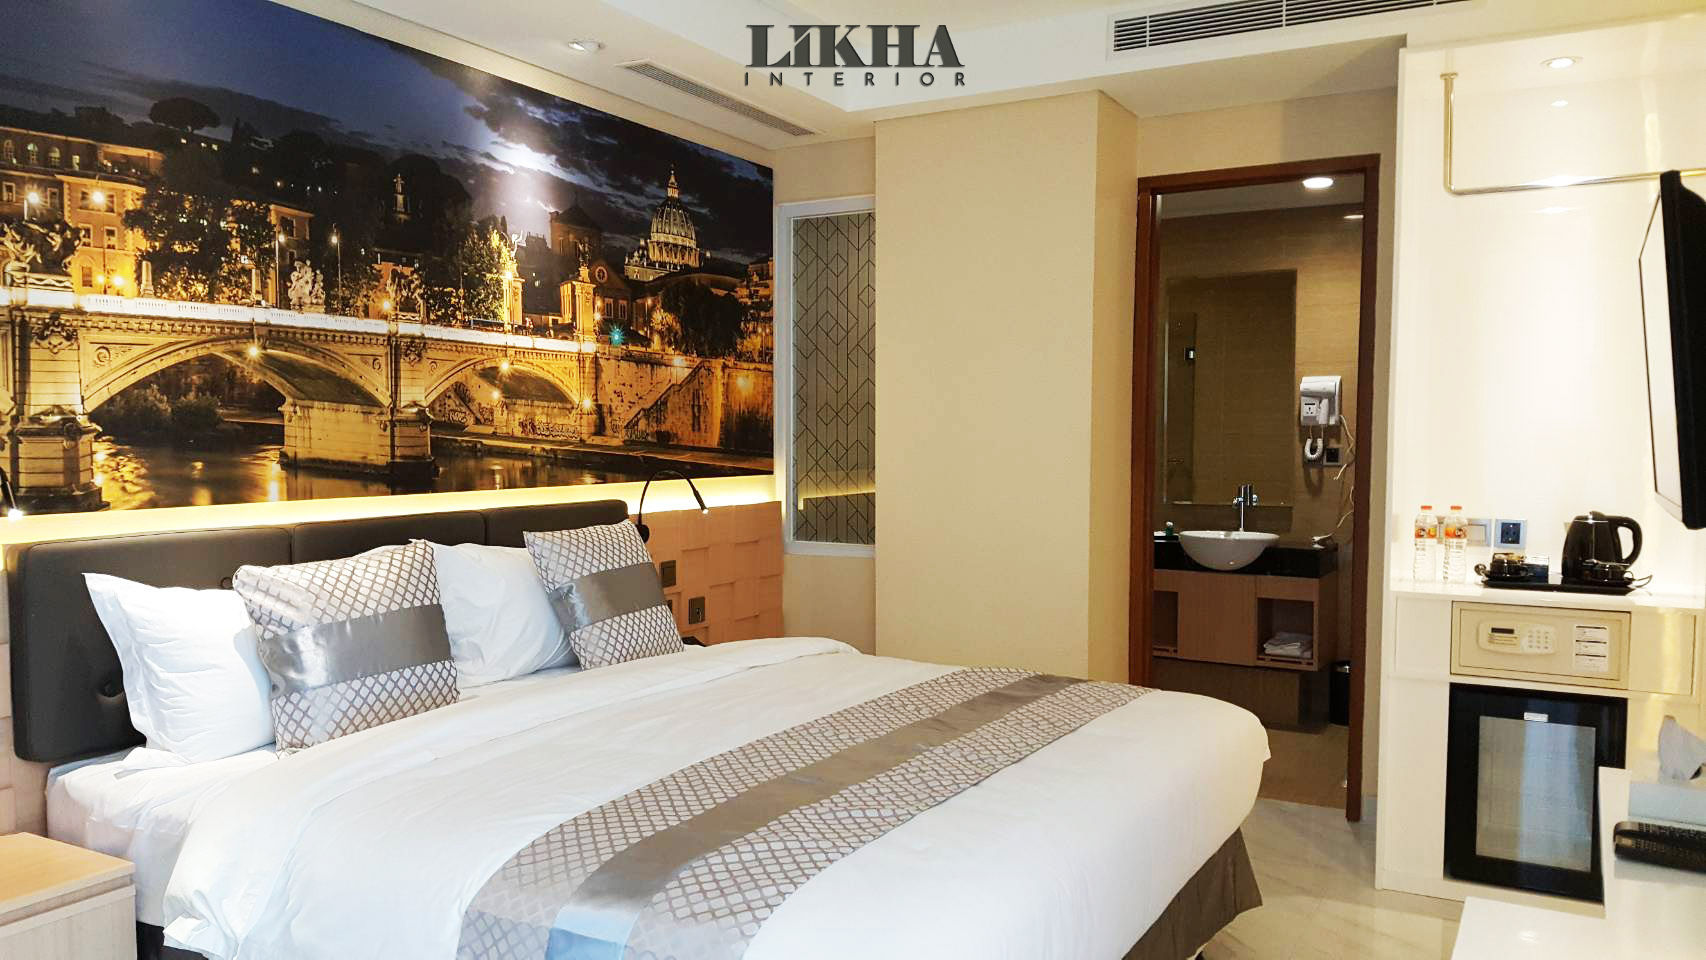 HOTEL ELEGAN DAN NYAMAN di Grand Viveana, Likha Interior Likha Interior Espacios comerciales Contrachapado Hoteles